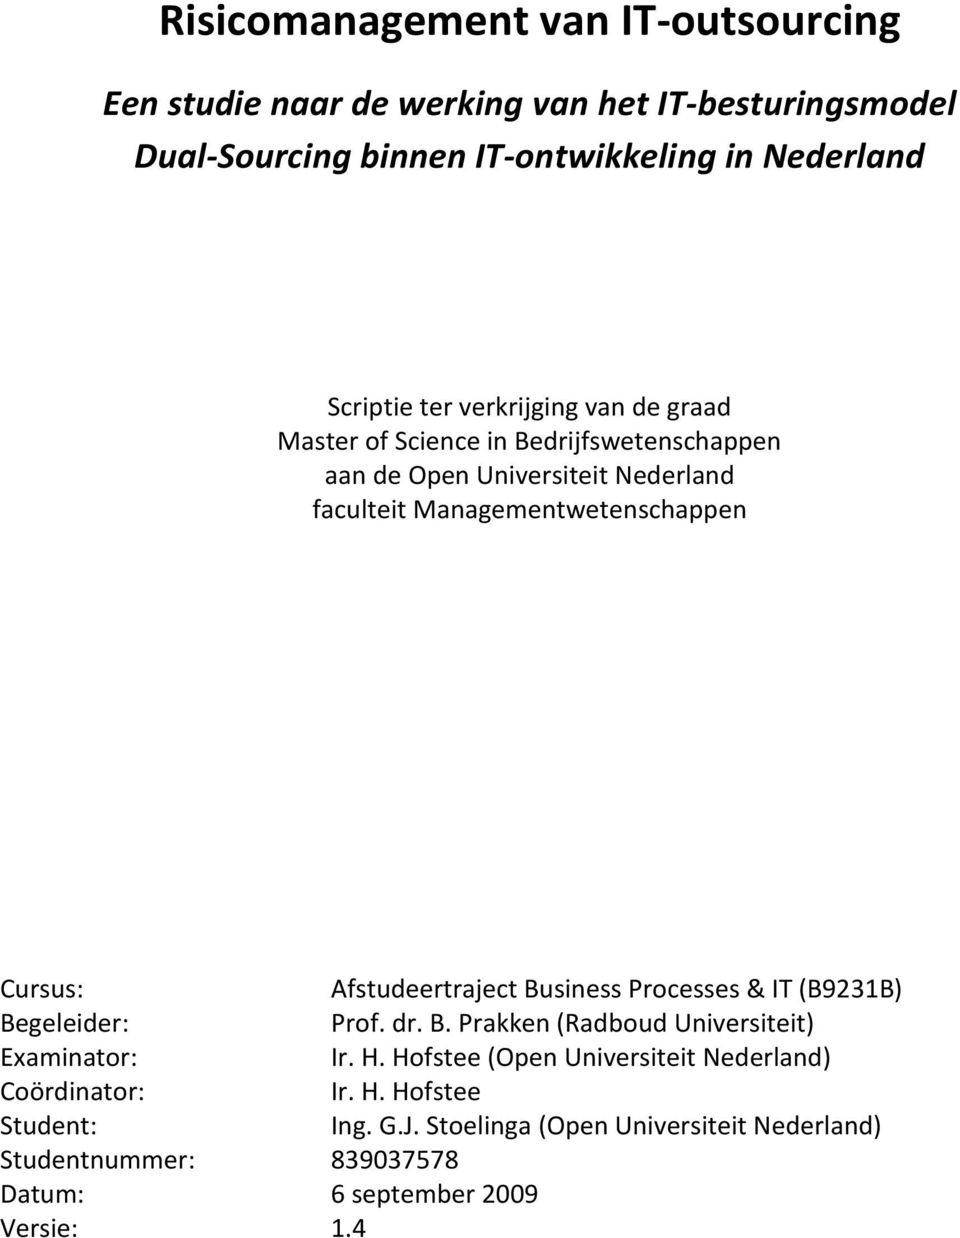 Afstudeertraject Business Processes & IT (B9231B) Begeleider: Prof. dr. B. Prakken (Radboud Universiteit) Examinator: Ir. H.